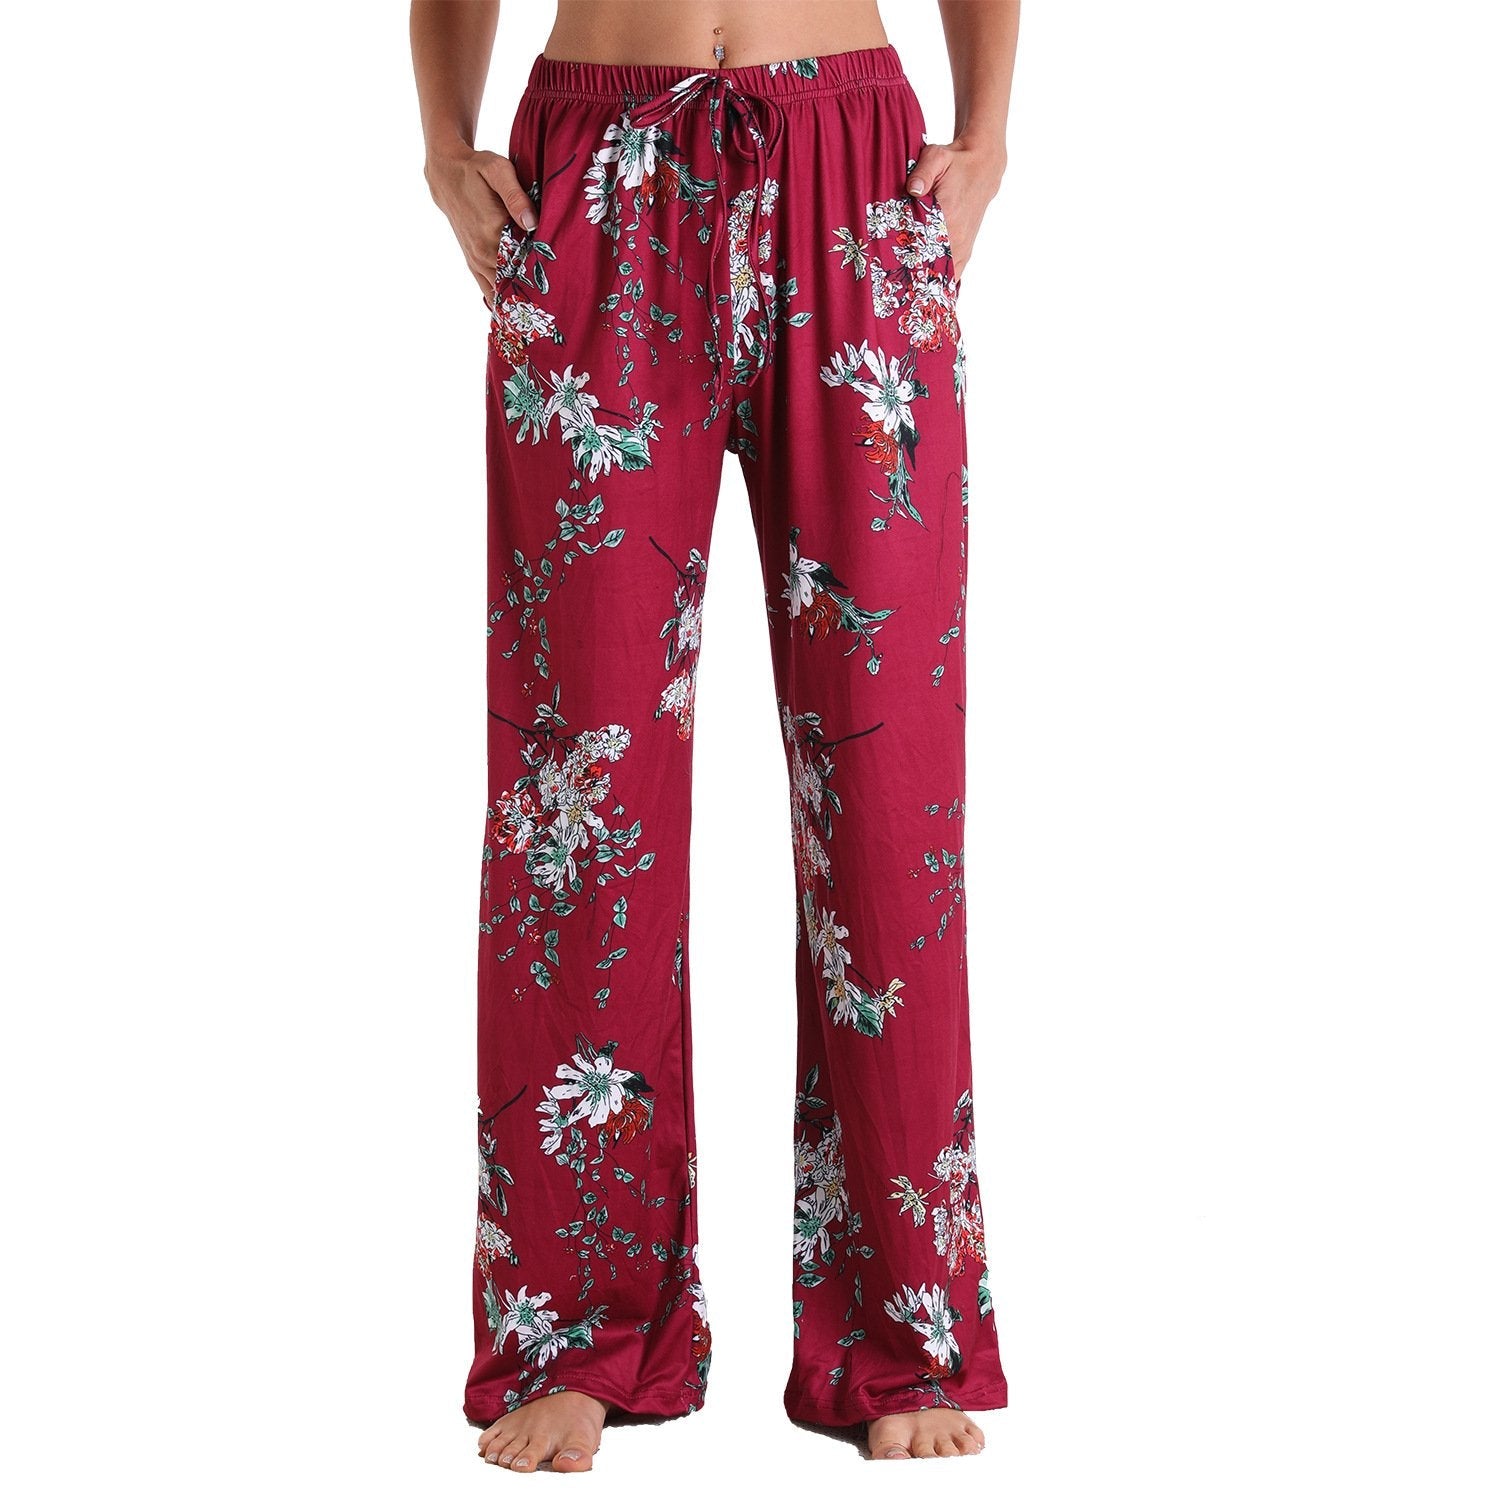 Leisure Women Comfortable Pants with Pocket-Pajamas-3012-S-Free Shipping Leatheretro